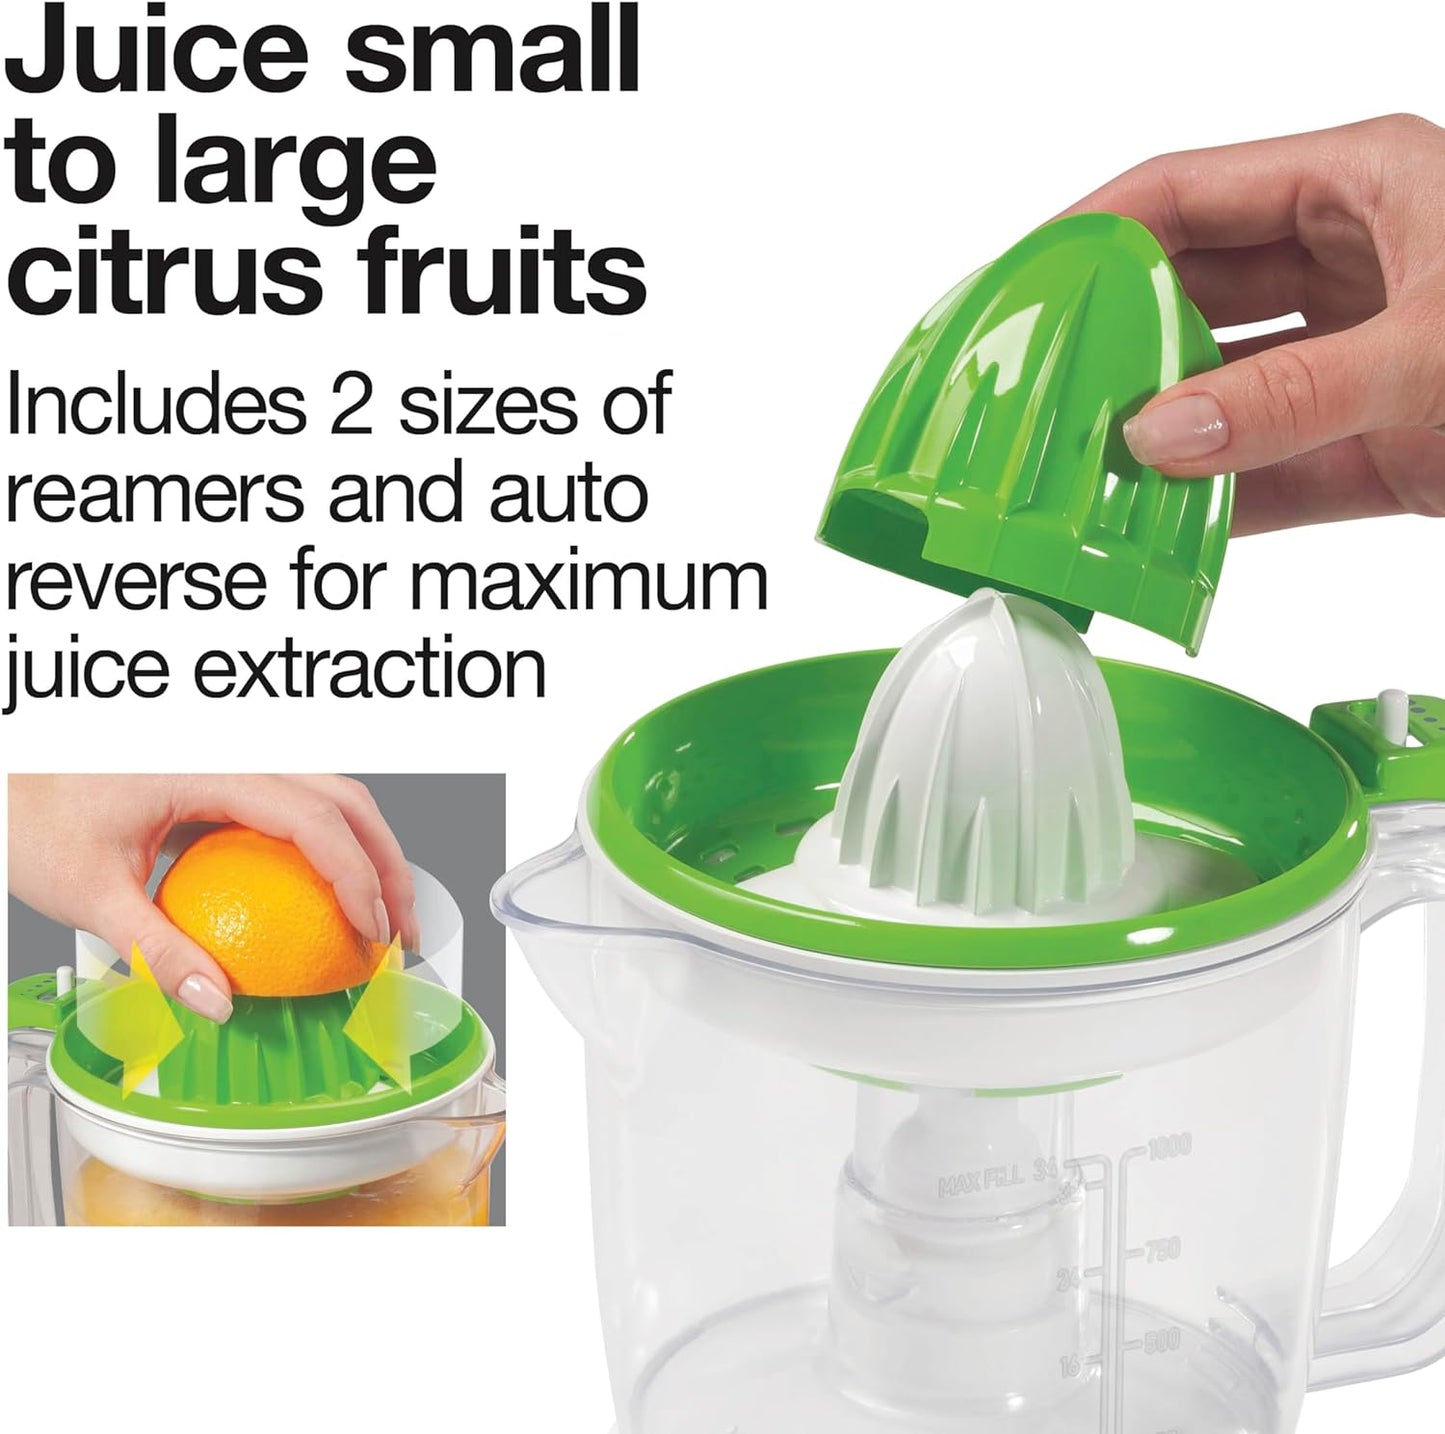 Proctor Silex Juicer Electric Citrus Juicer Machine, 34 oz., for Orange, Lemon, Grapefruit Juice, White and Green (66340)